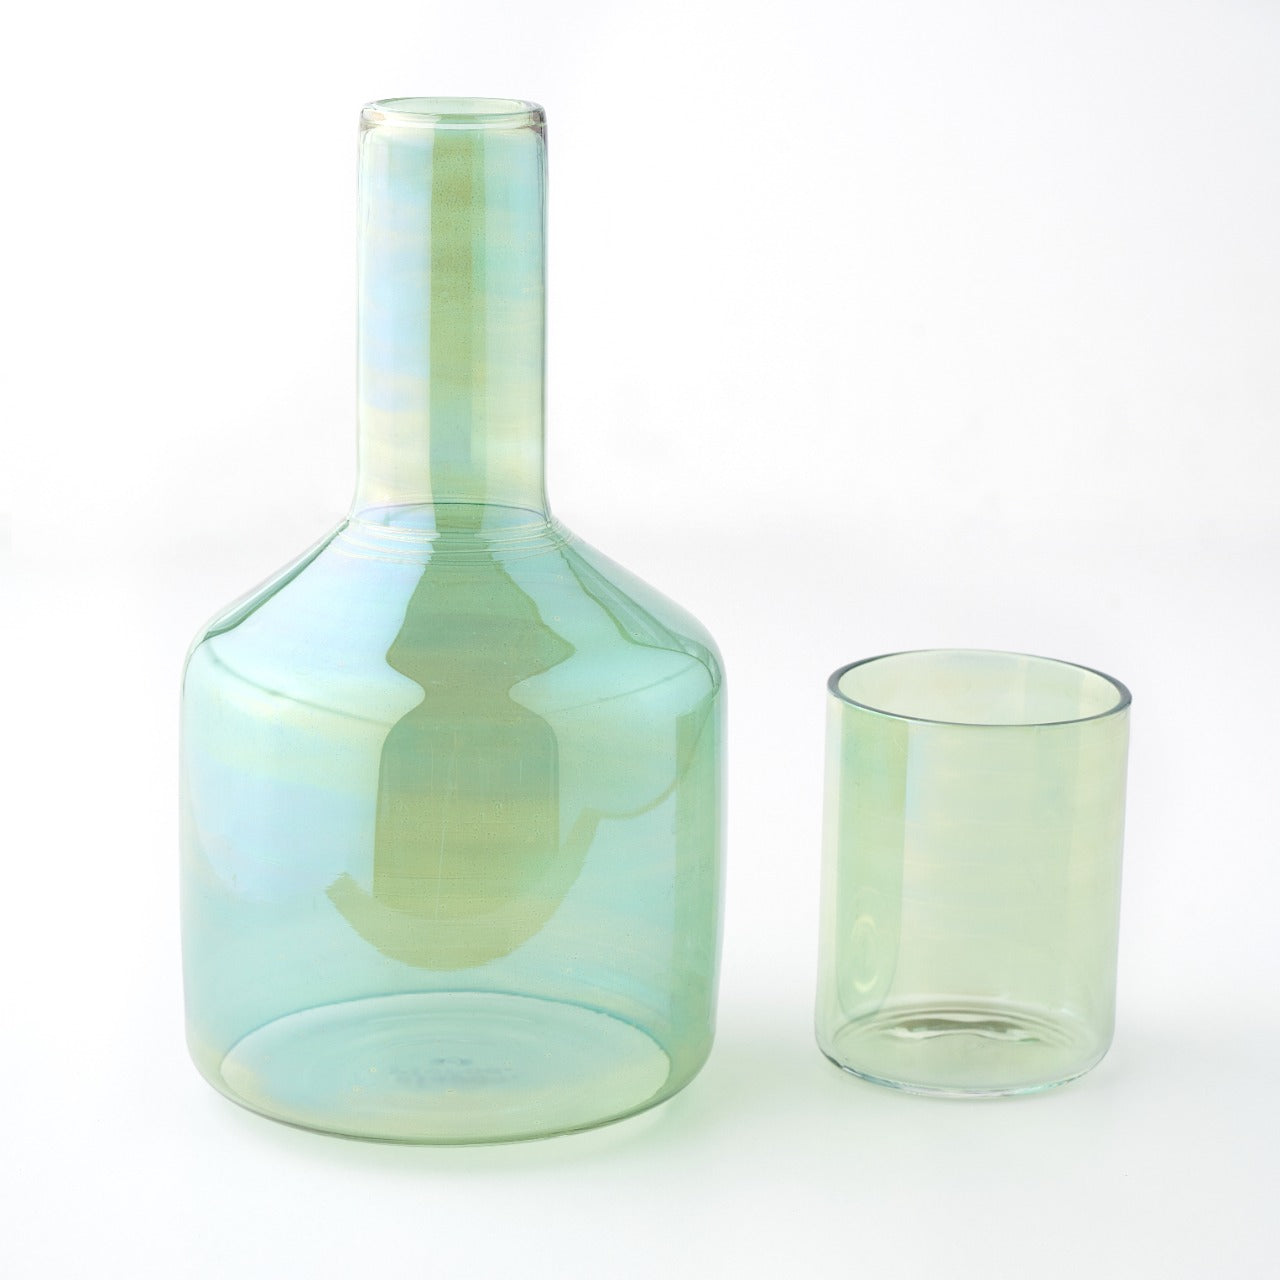 Rakoozy- Hand Blown Glass Bottle with 1 Cup